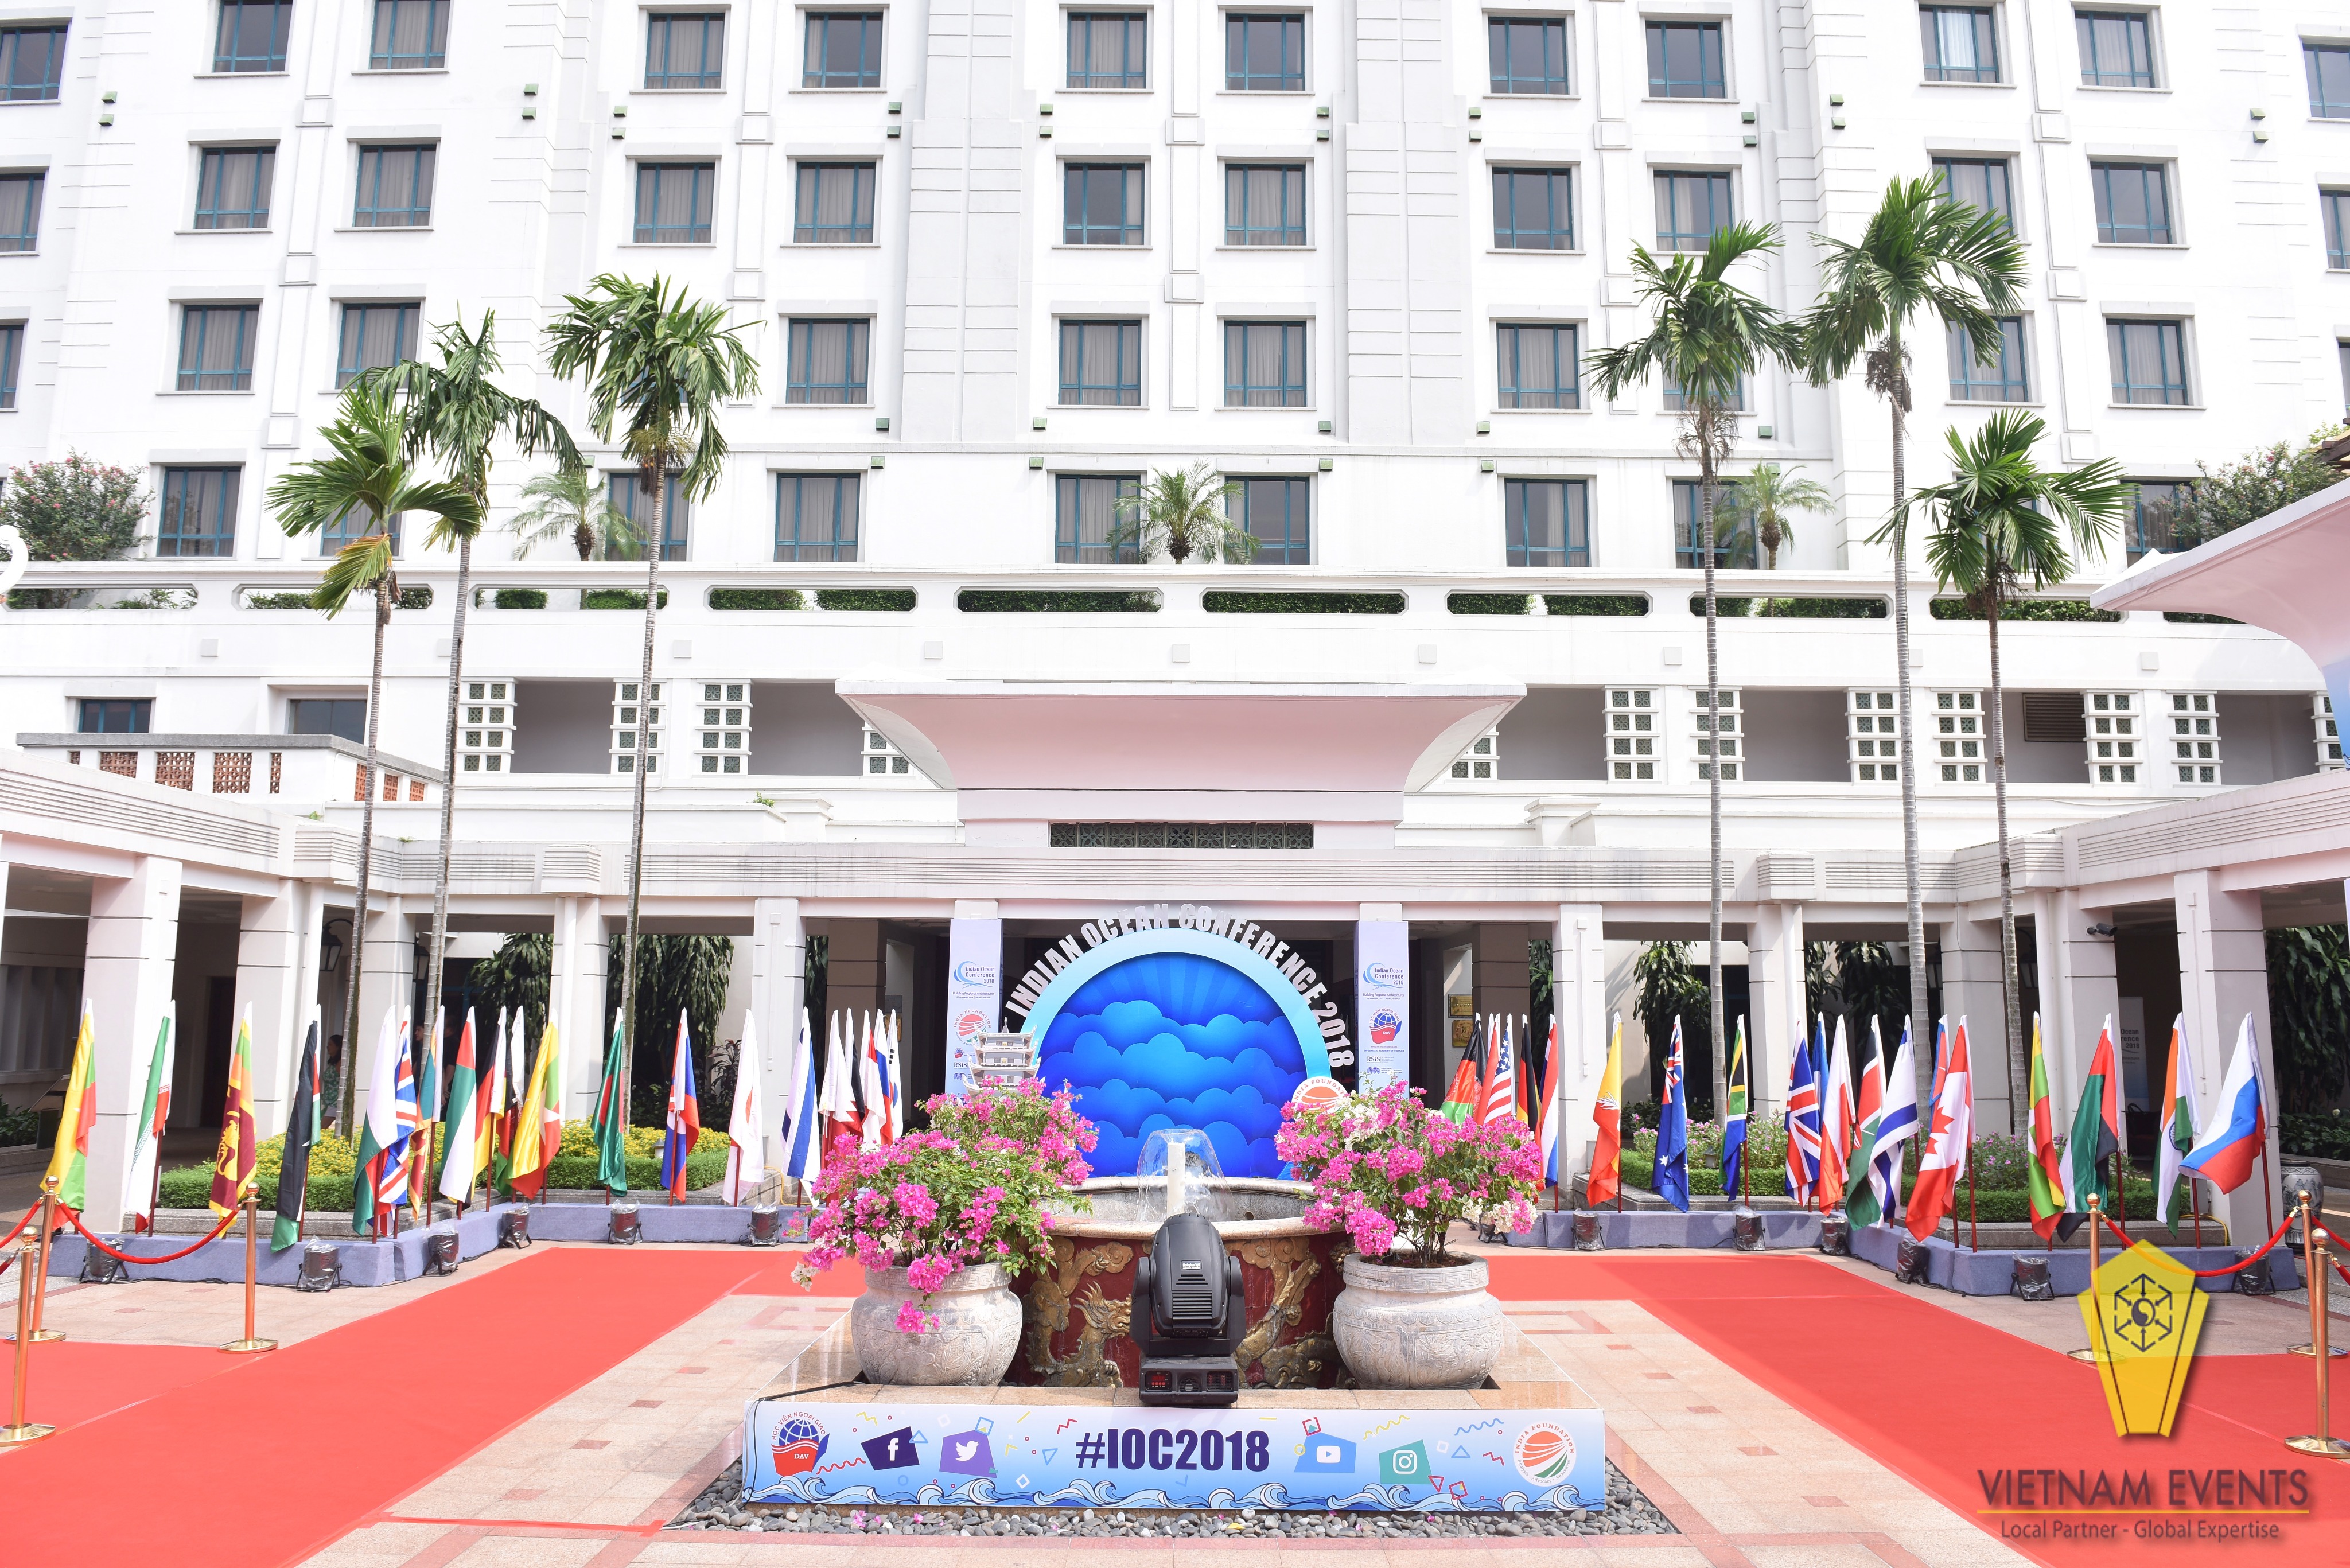 Indian Ocean Conference 2018 in Hanoi